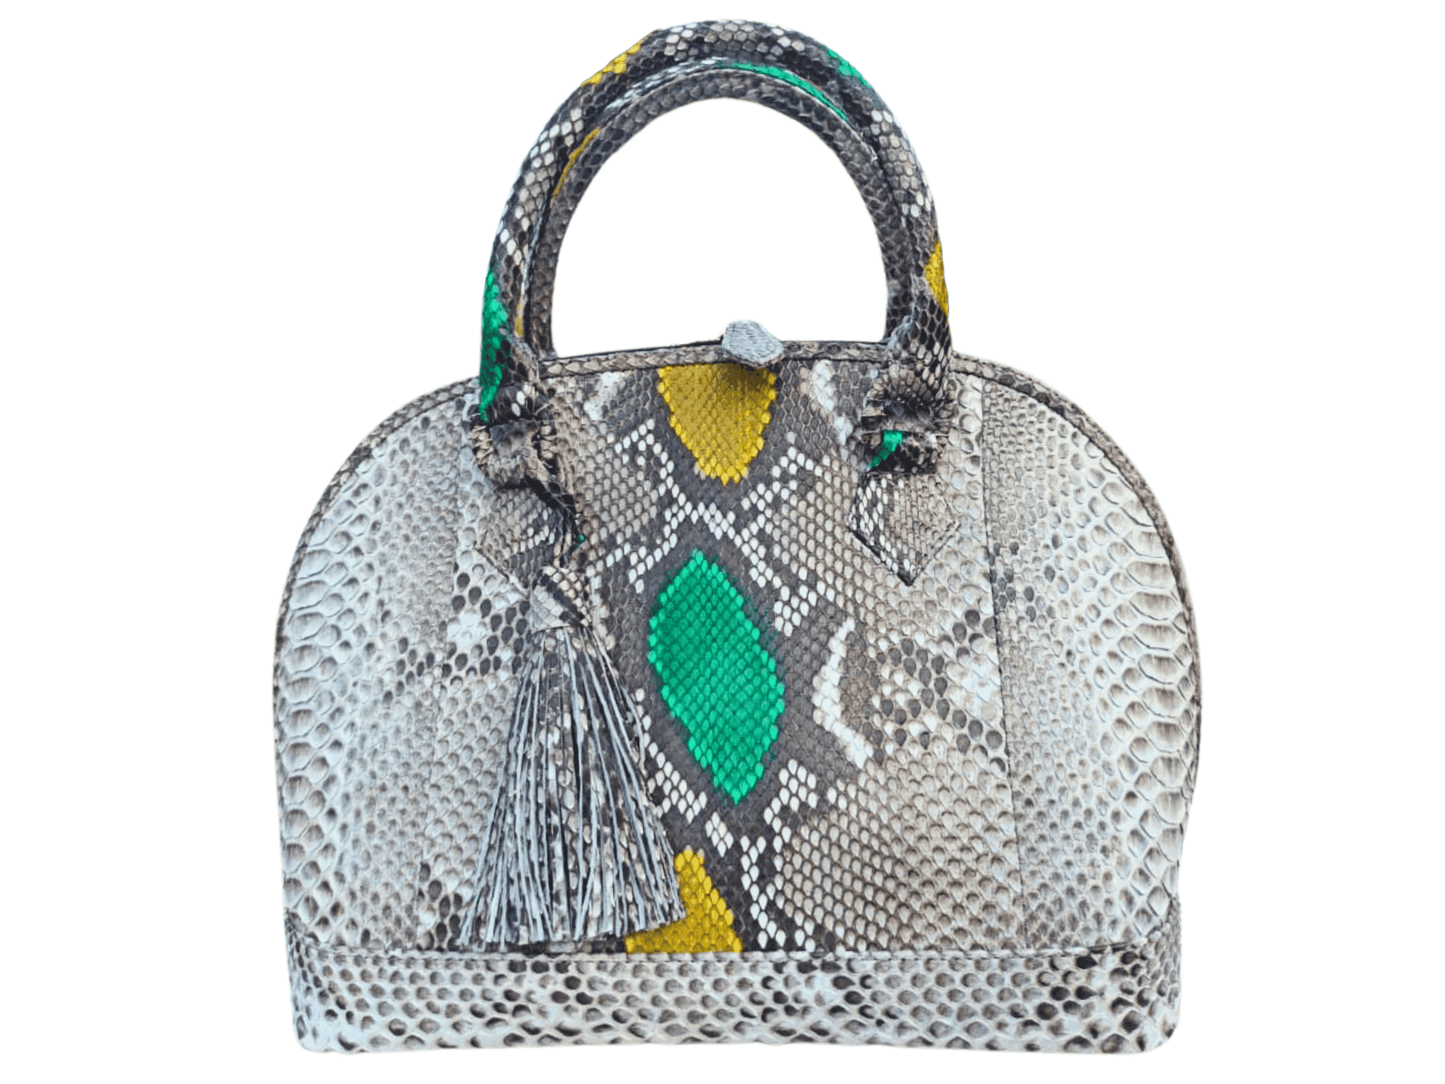 Snakeskin Bowler Bag Gray Python Jacket by LFM Fashion